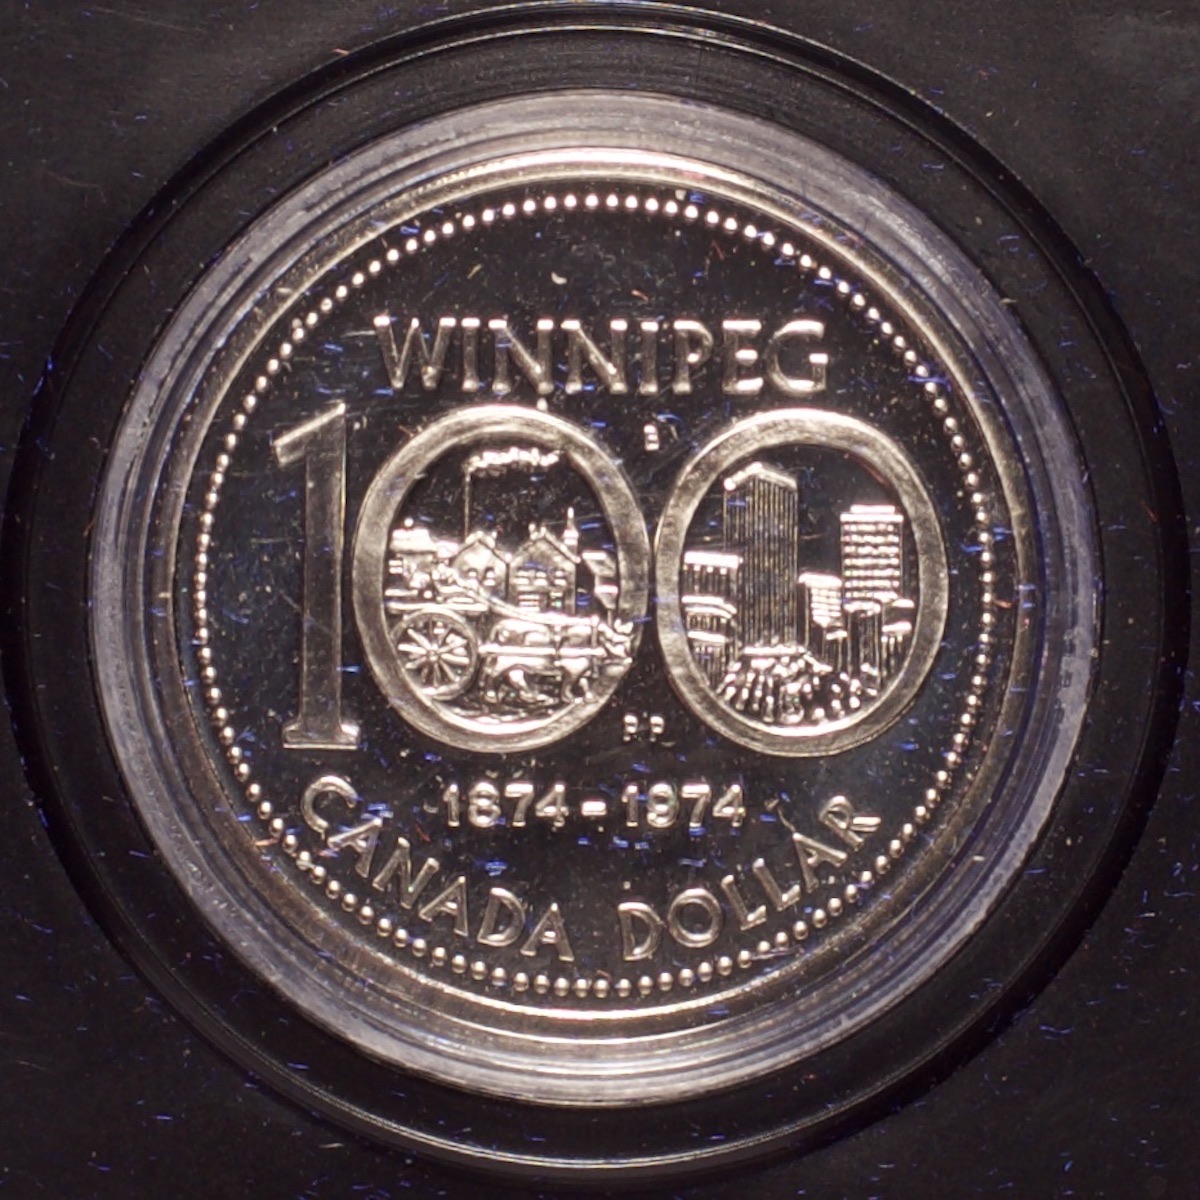 1974 $1 Winnipeg Commemorative Silver Dollar 